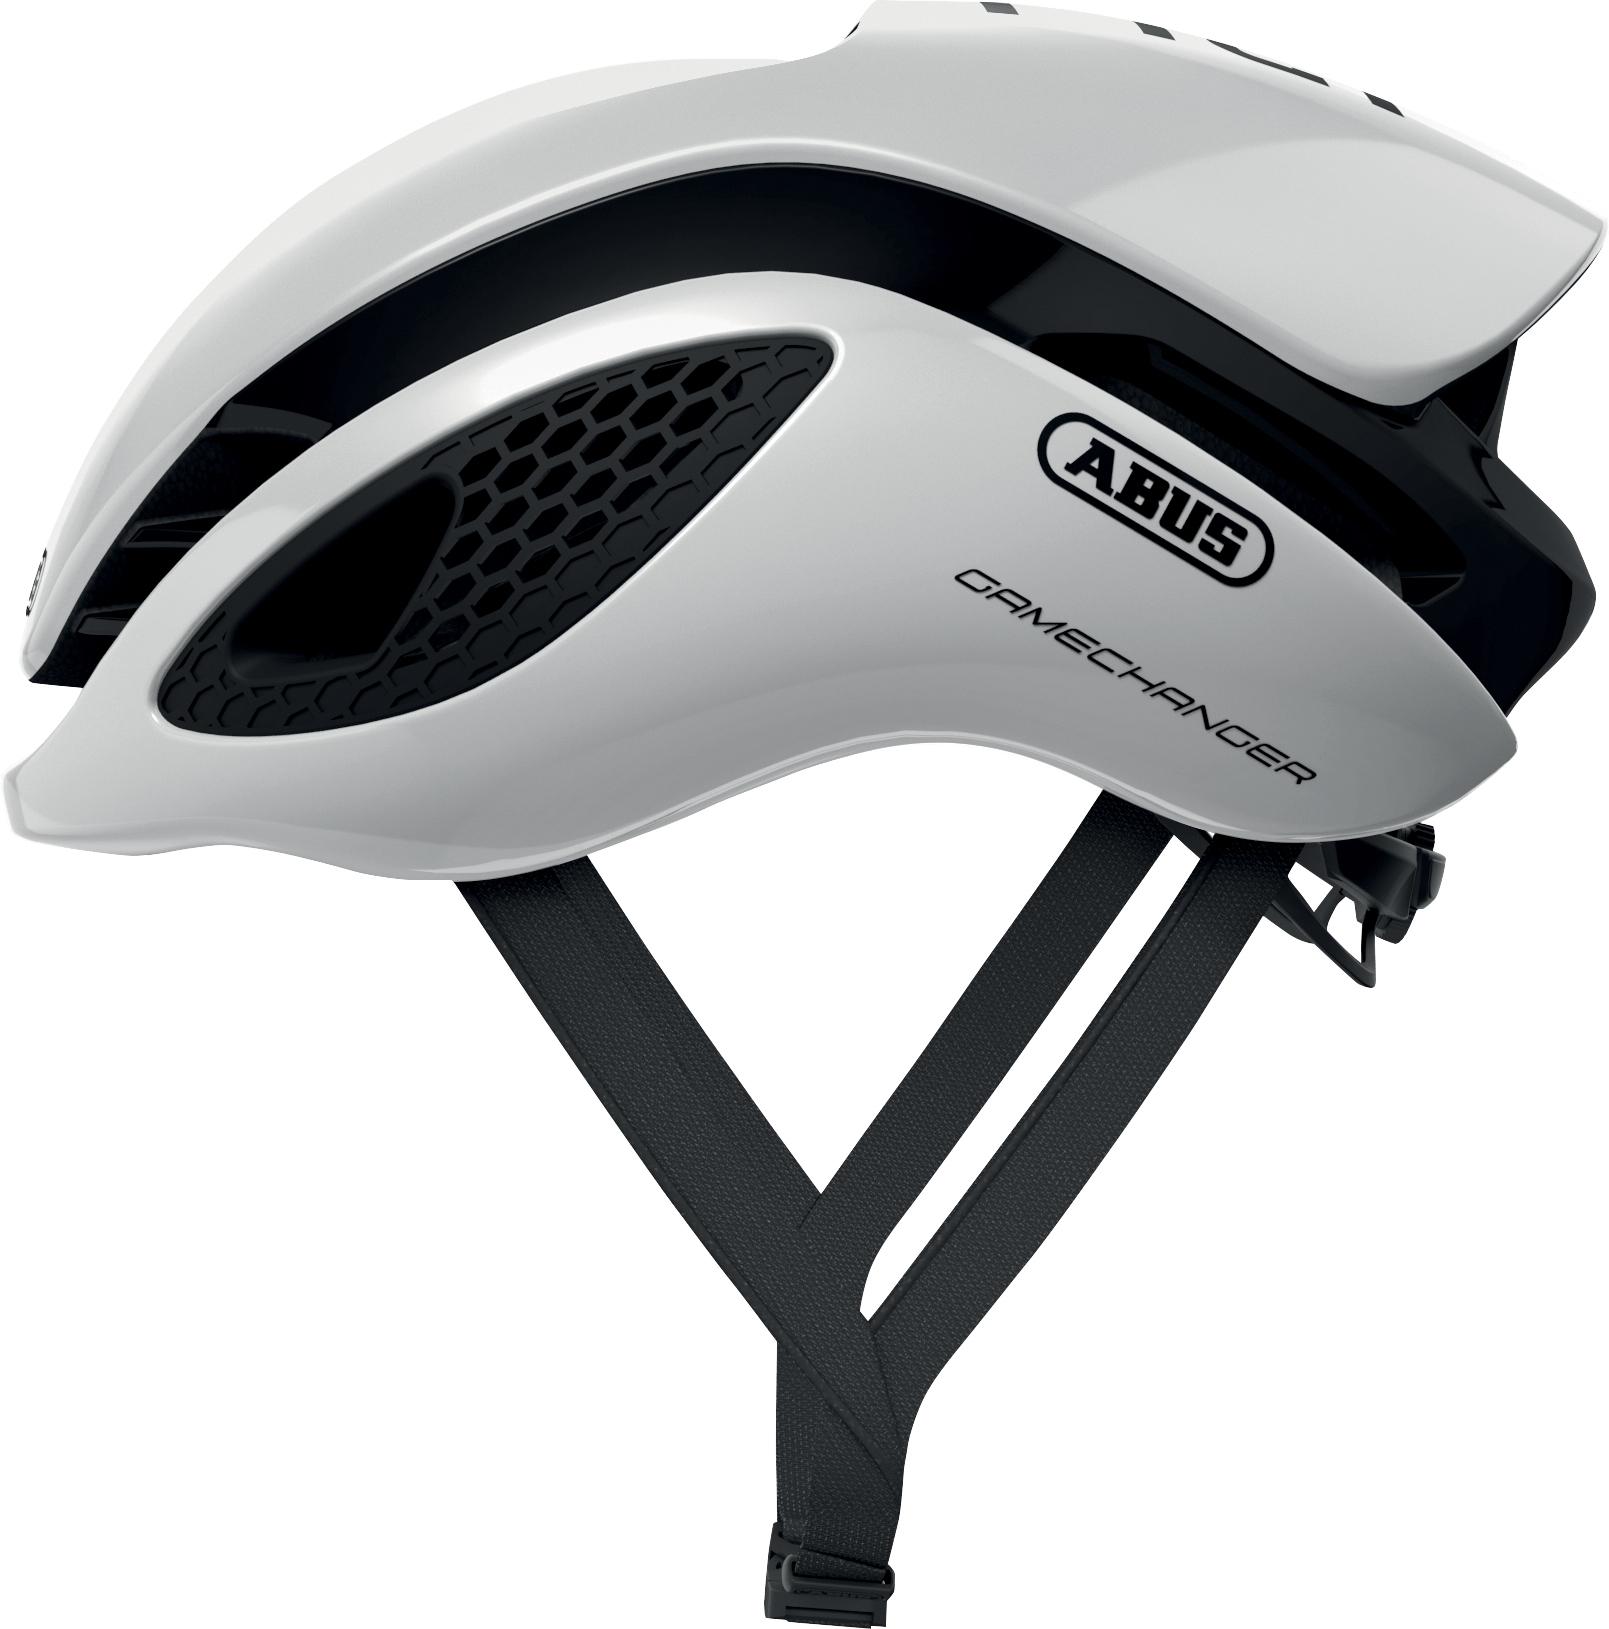 Abus Gamechanger Road Cycling Helmet - Polar White